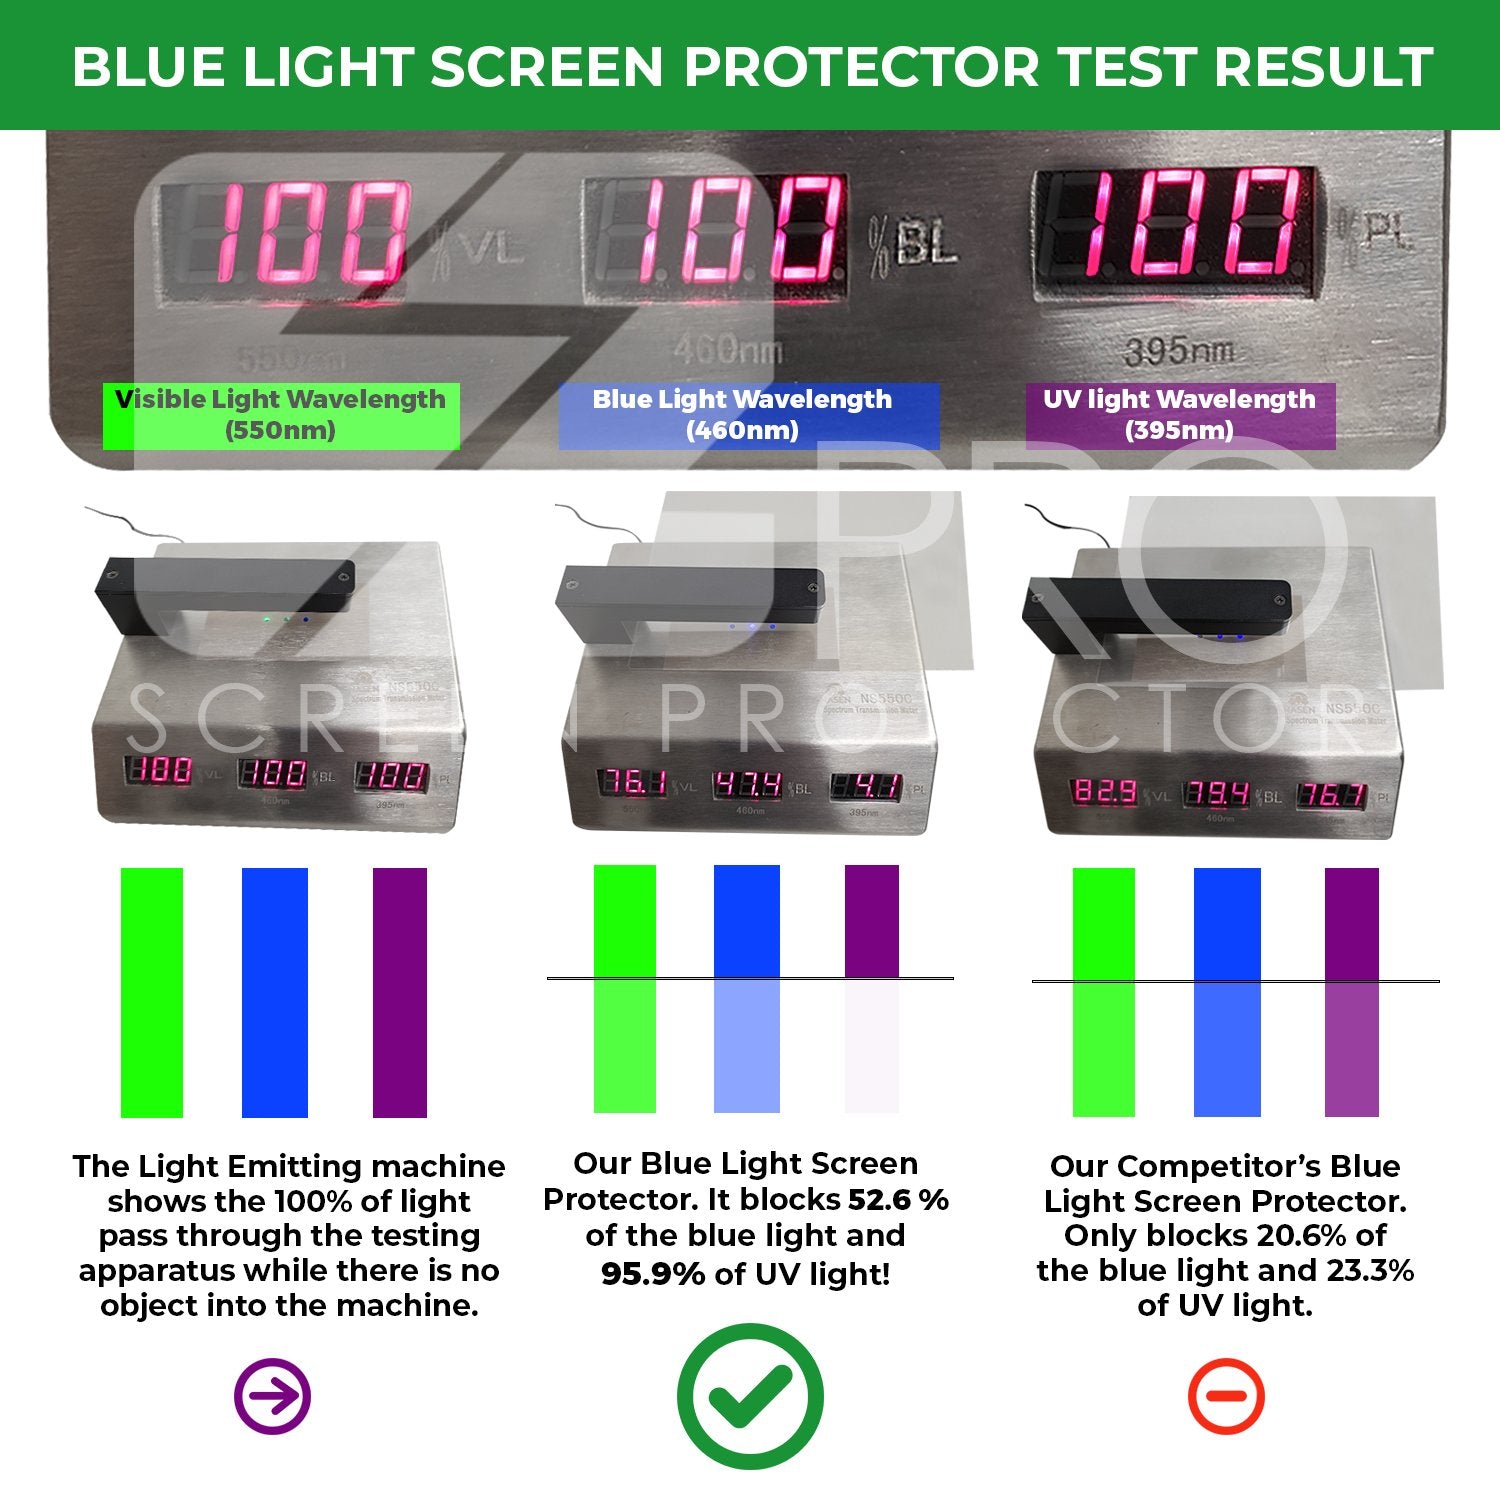 Anti Blue Light Screen Panel for Desktop Monitor, Blocks Excessive Harmful Blue Light, Reduce Eye Fatigue and Eye Strain